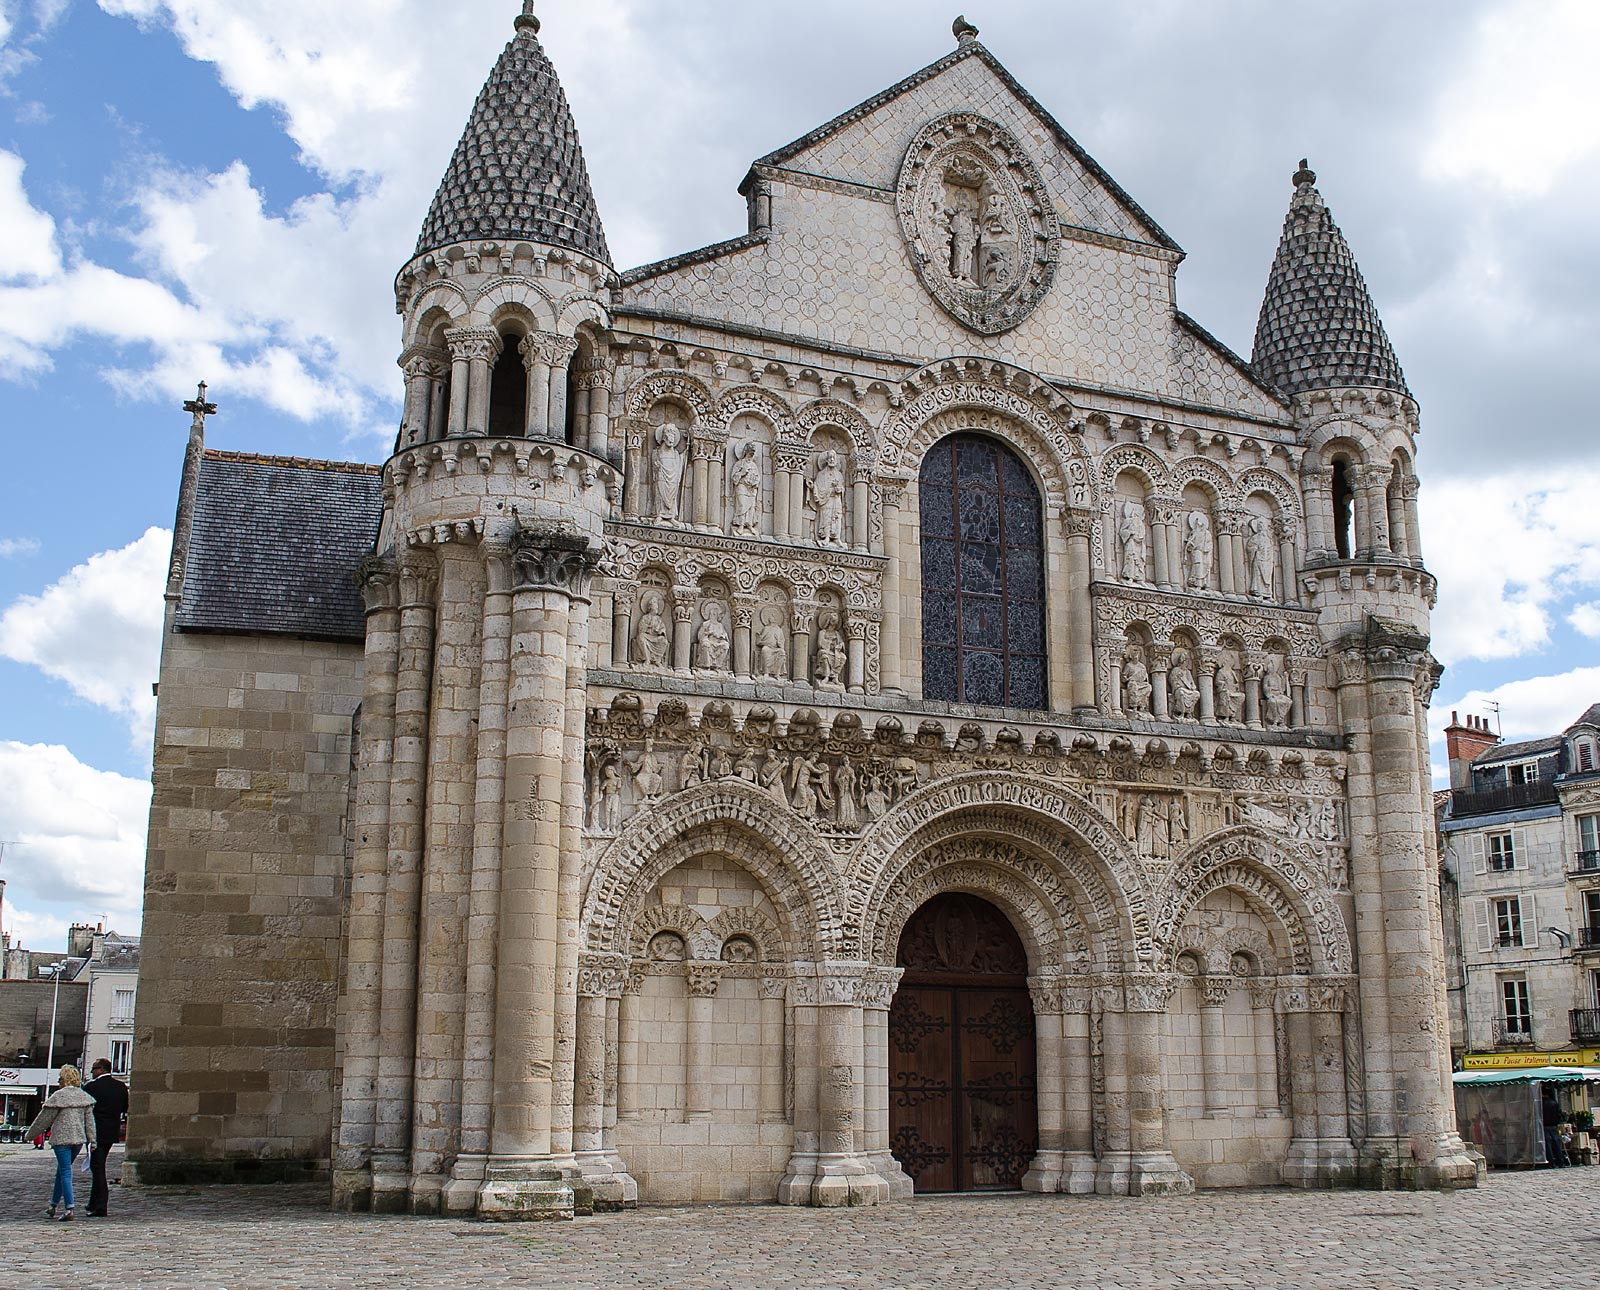 Нотр дам ля гранд. Церковь Нотр-дам-ля-Гранд, Франция. Нотр дам ла Гранд в Пуатье фасад. Нотр дам ля Гранд, Пуатье, Франция, 11-век.